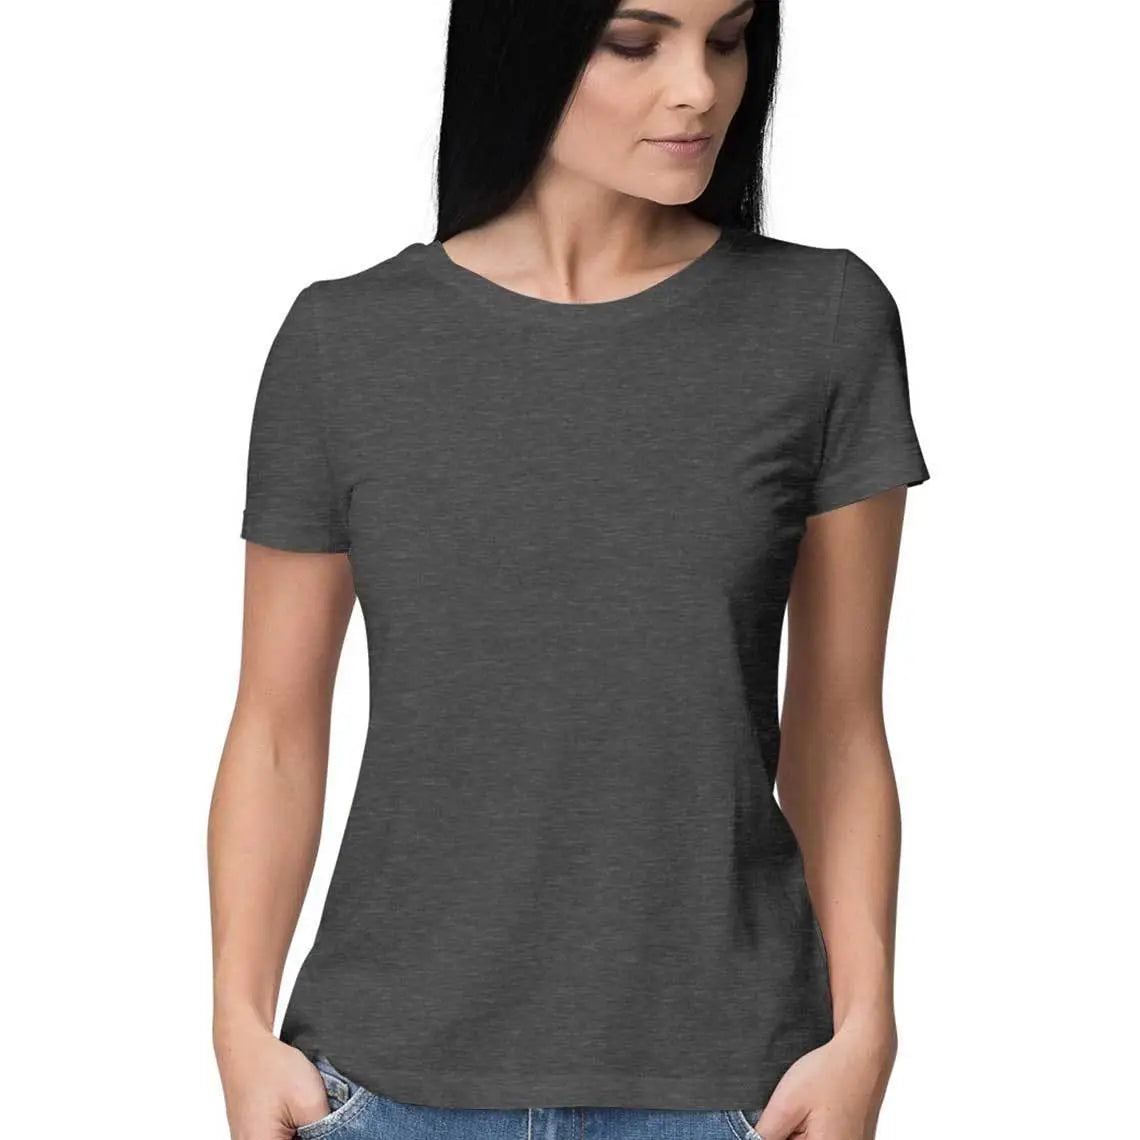 BILLIK -  SOLID Charcoal Grey Unisex T-Shirt